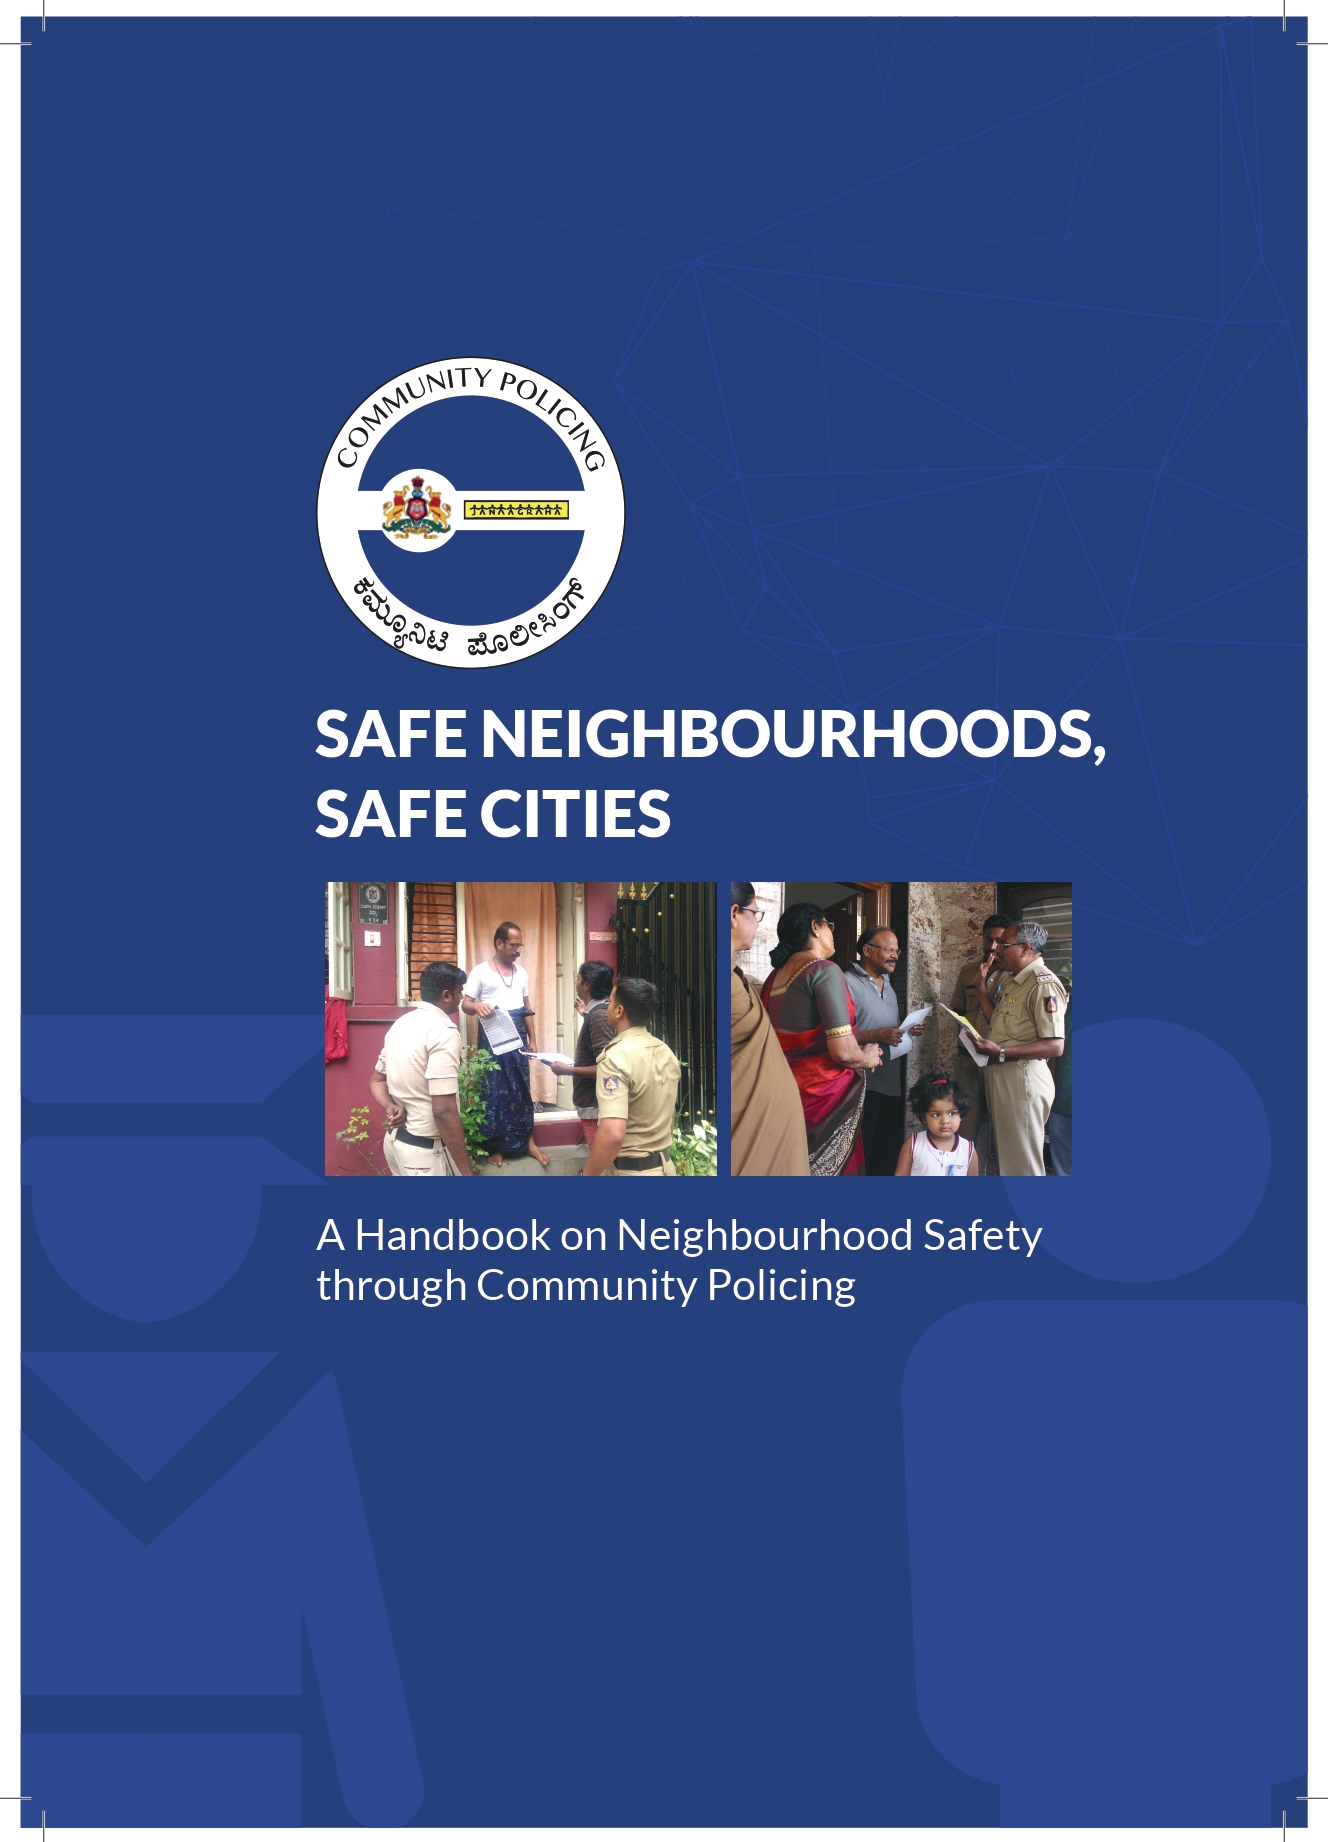 Handbook onCommunity Policing 2019